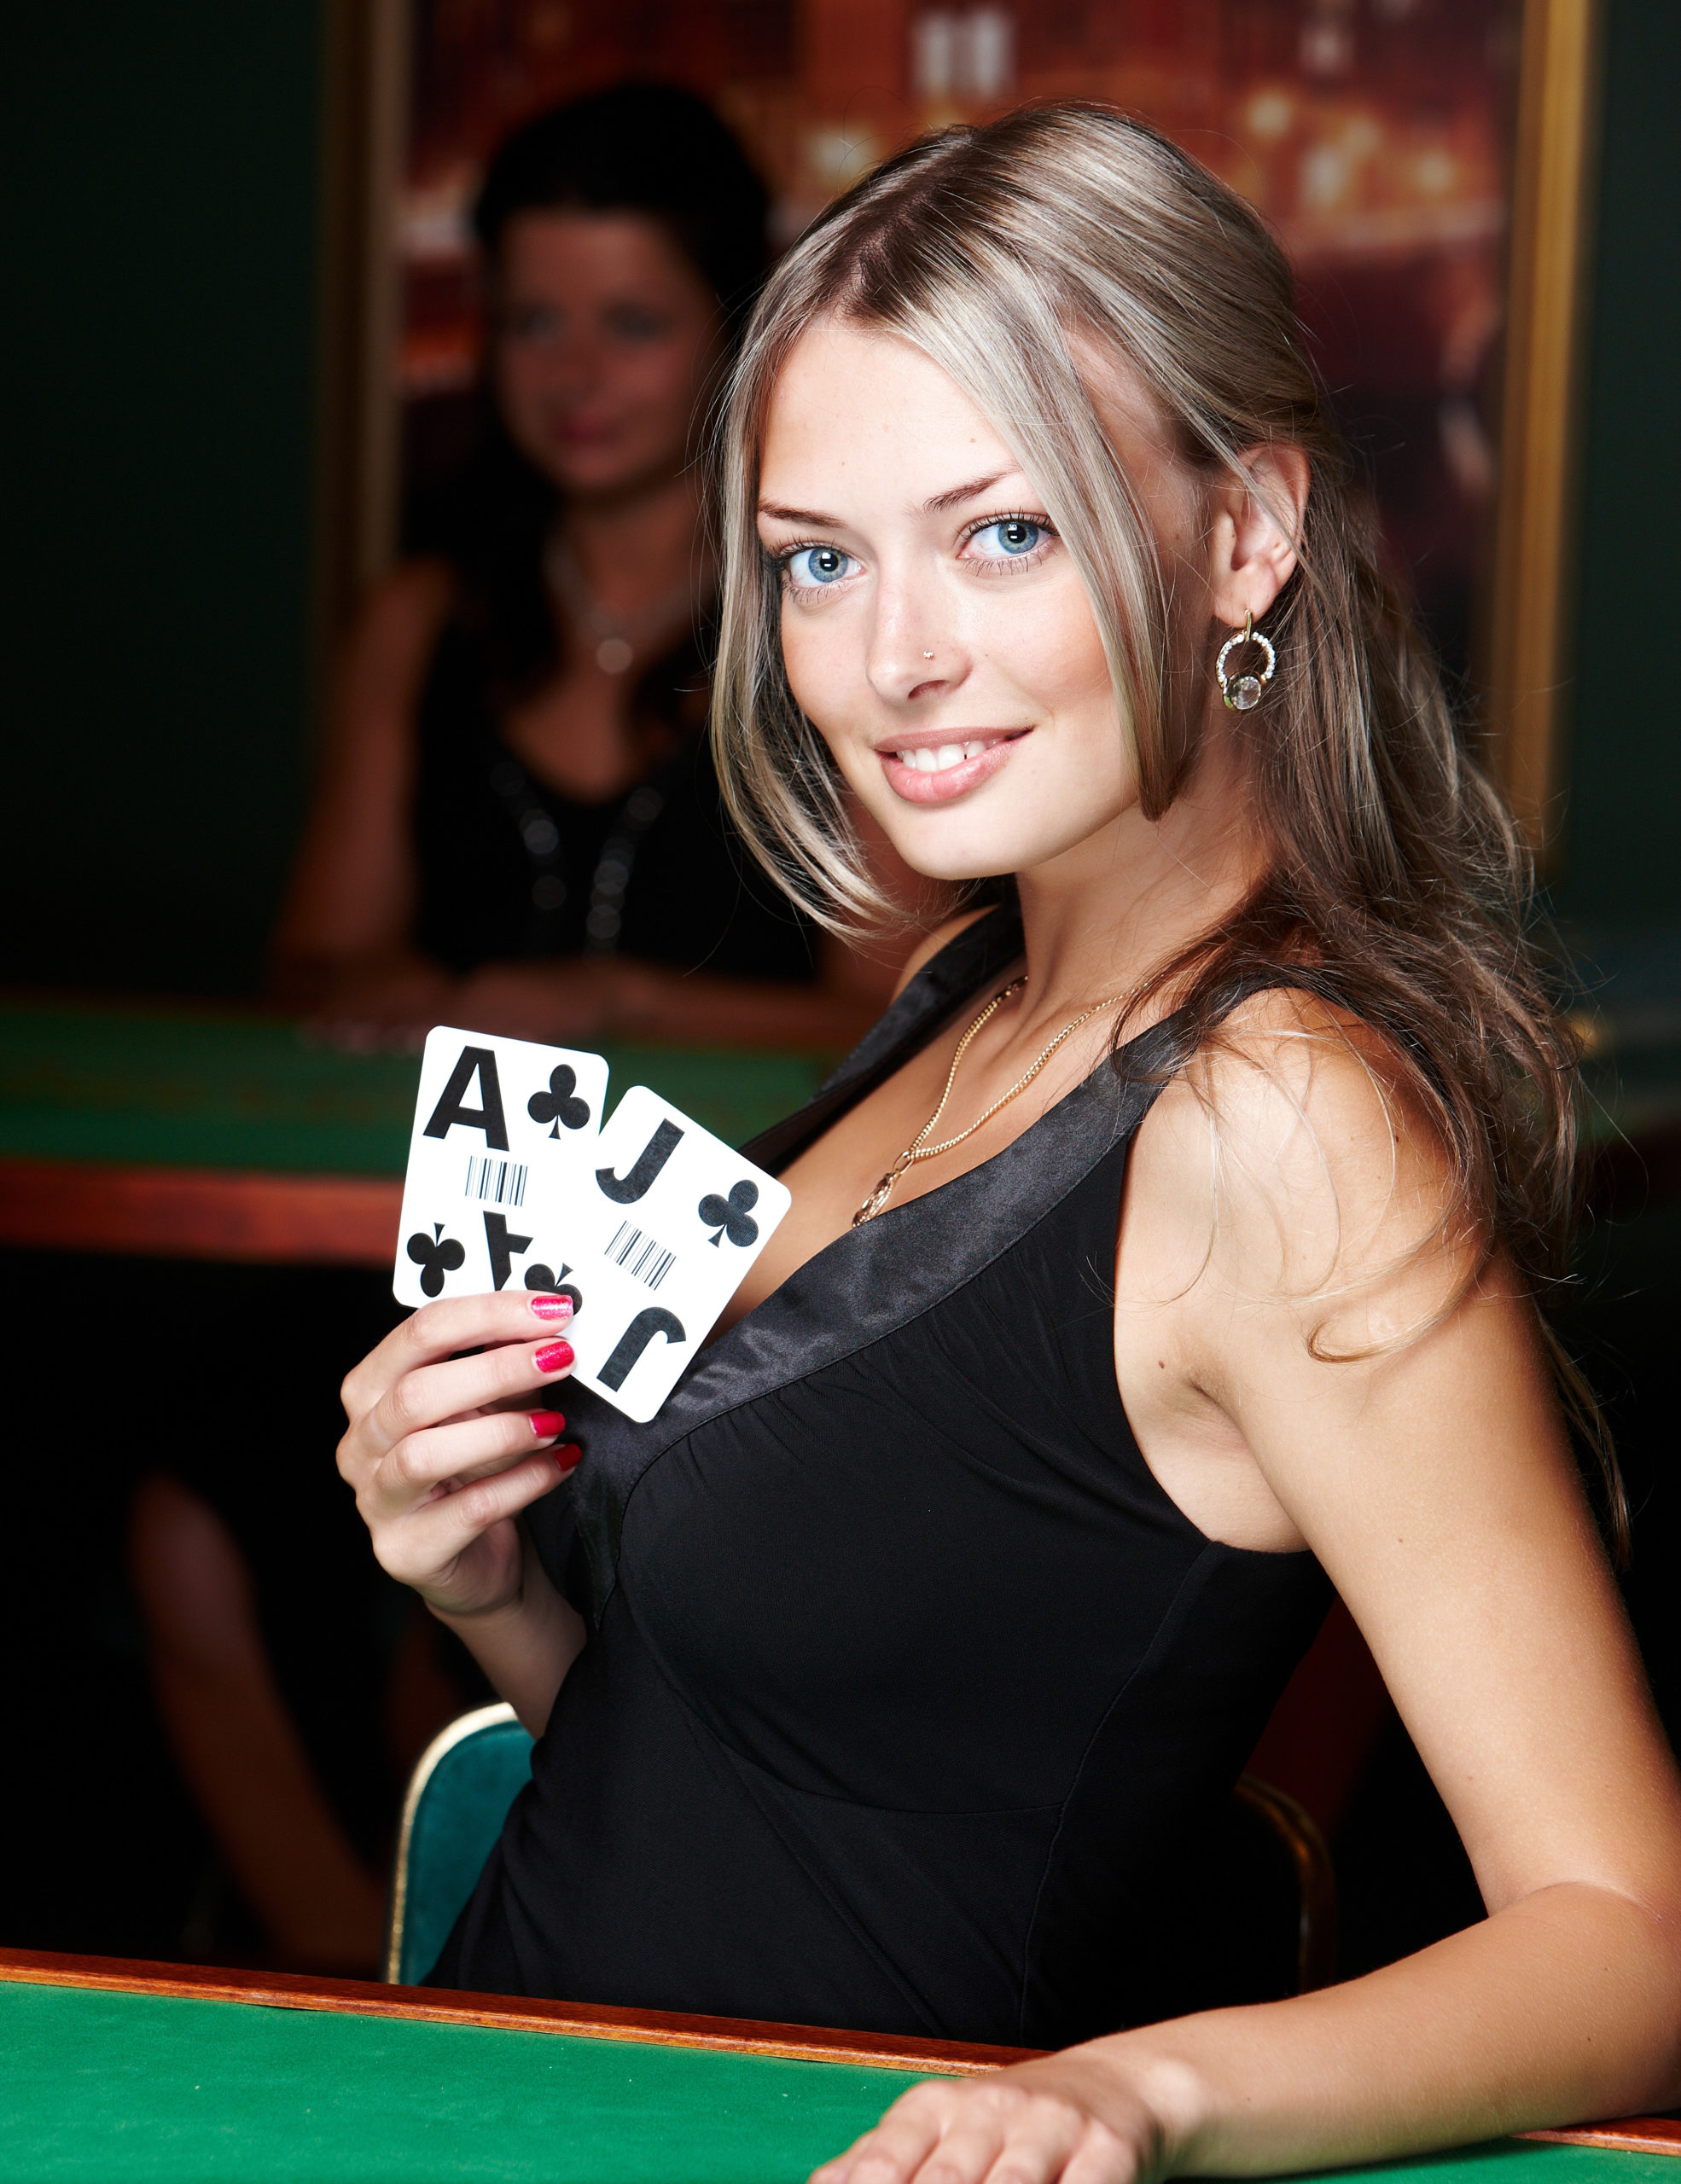 В предвкушении азарта. Фотосессия в казино. Девушки в казино. Покер девушки.